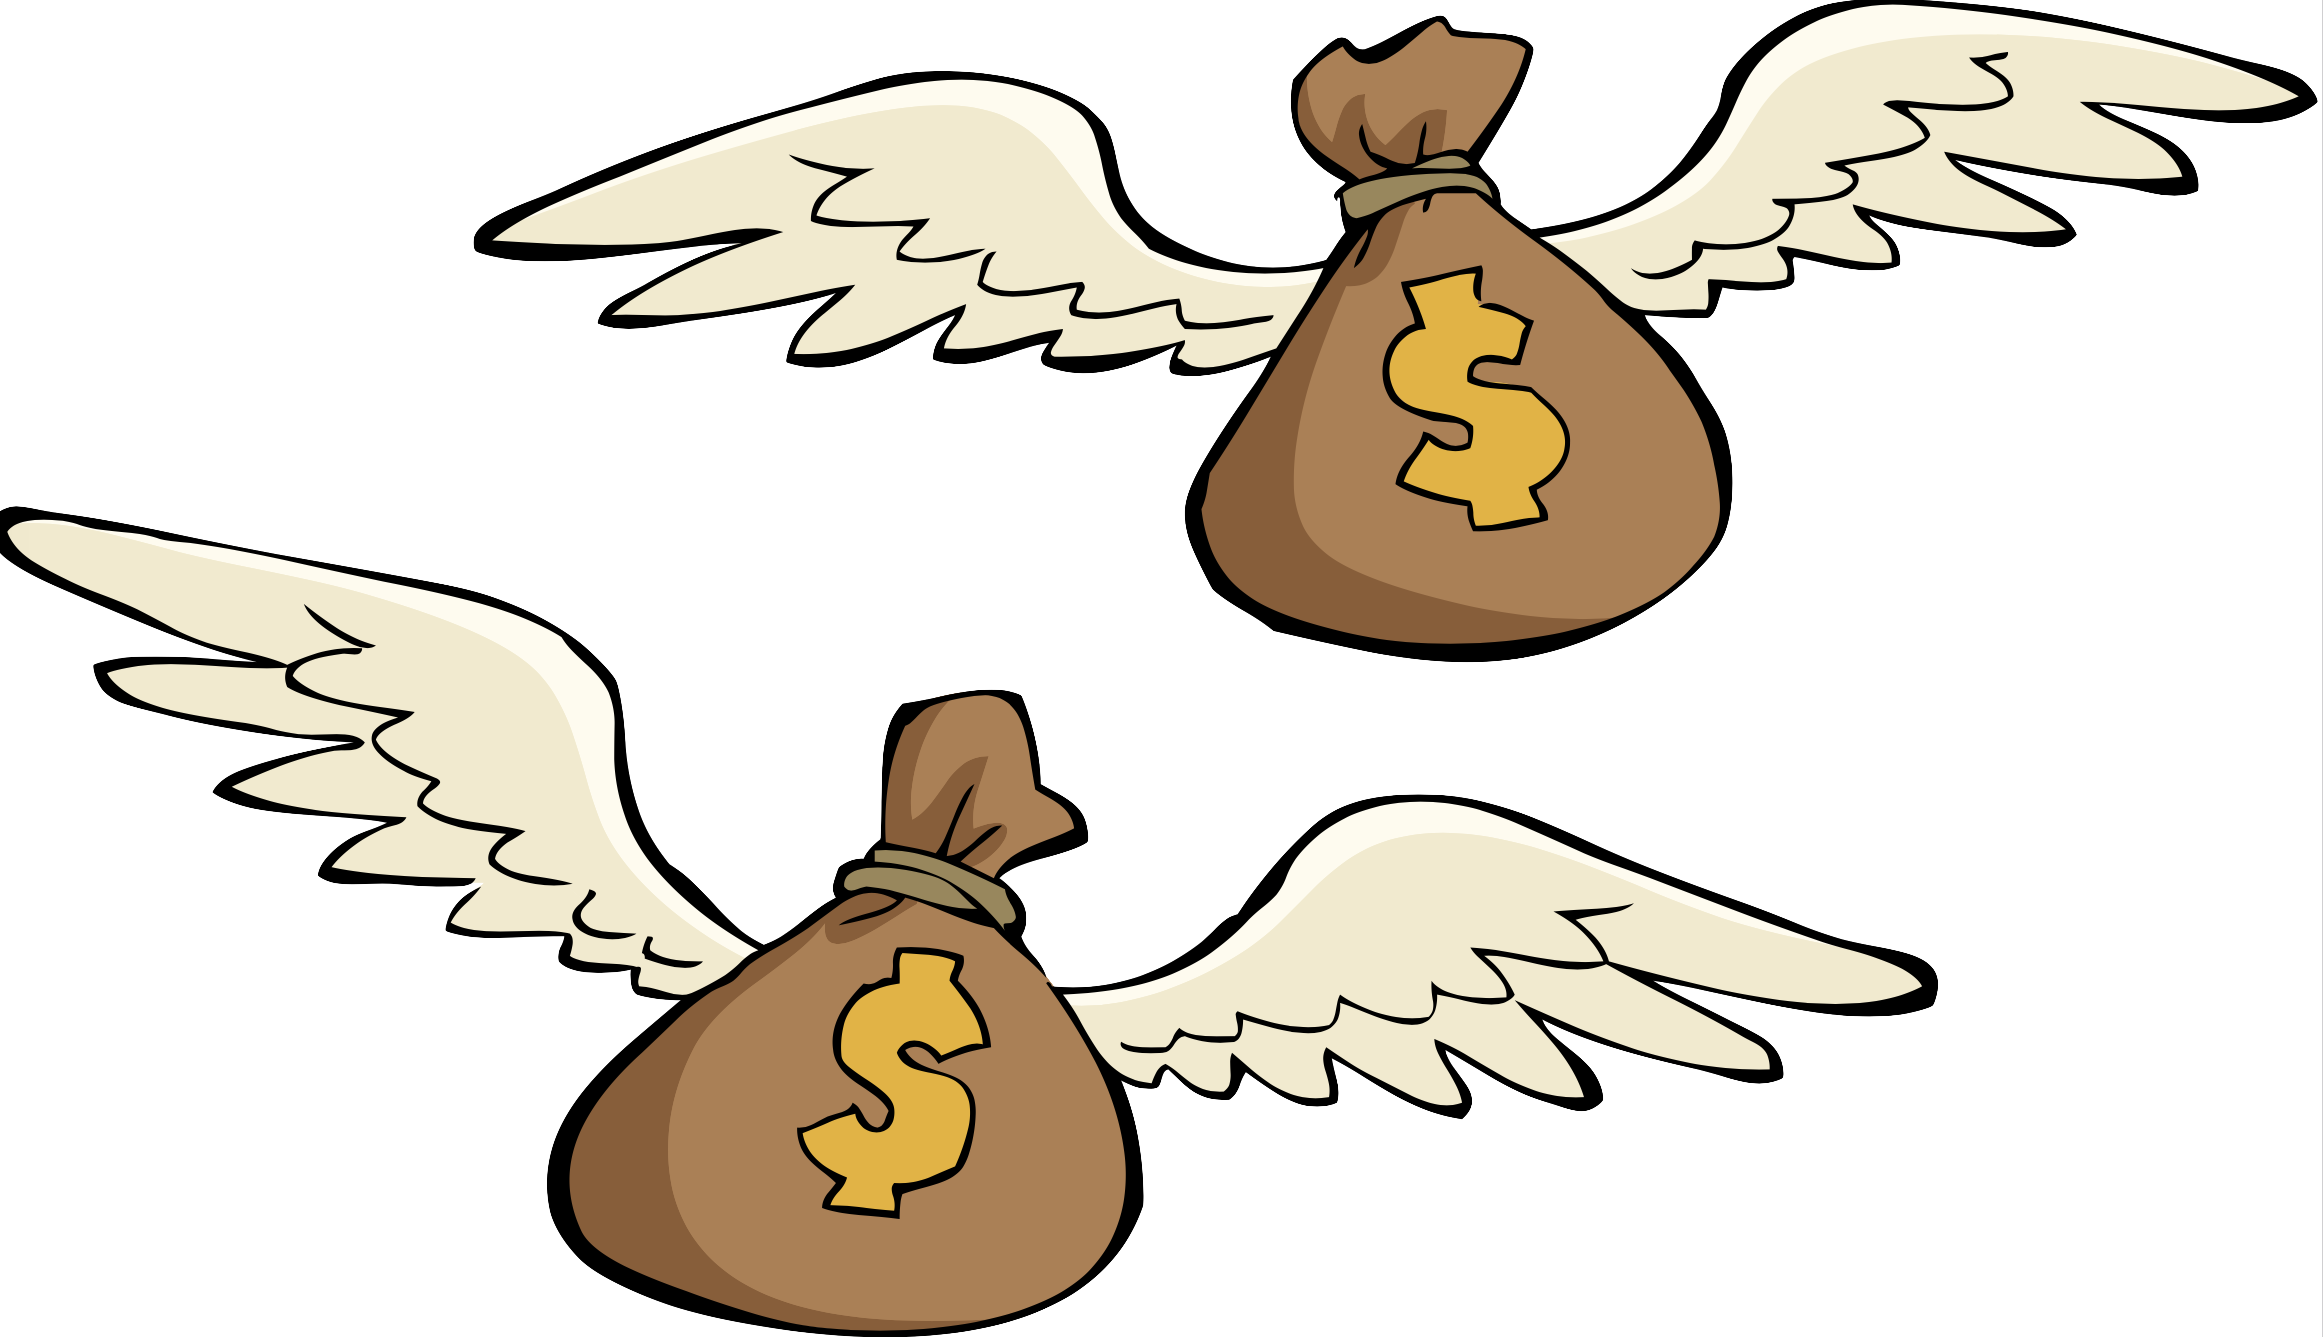 cartoon image of airborne money bags